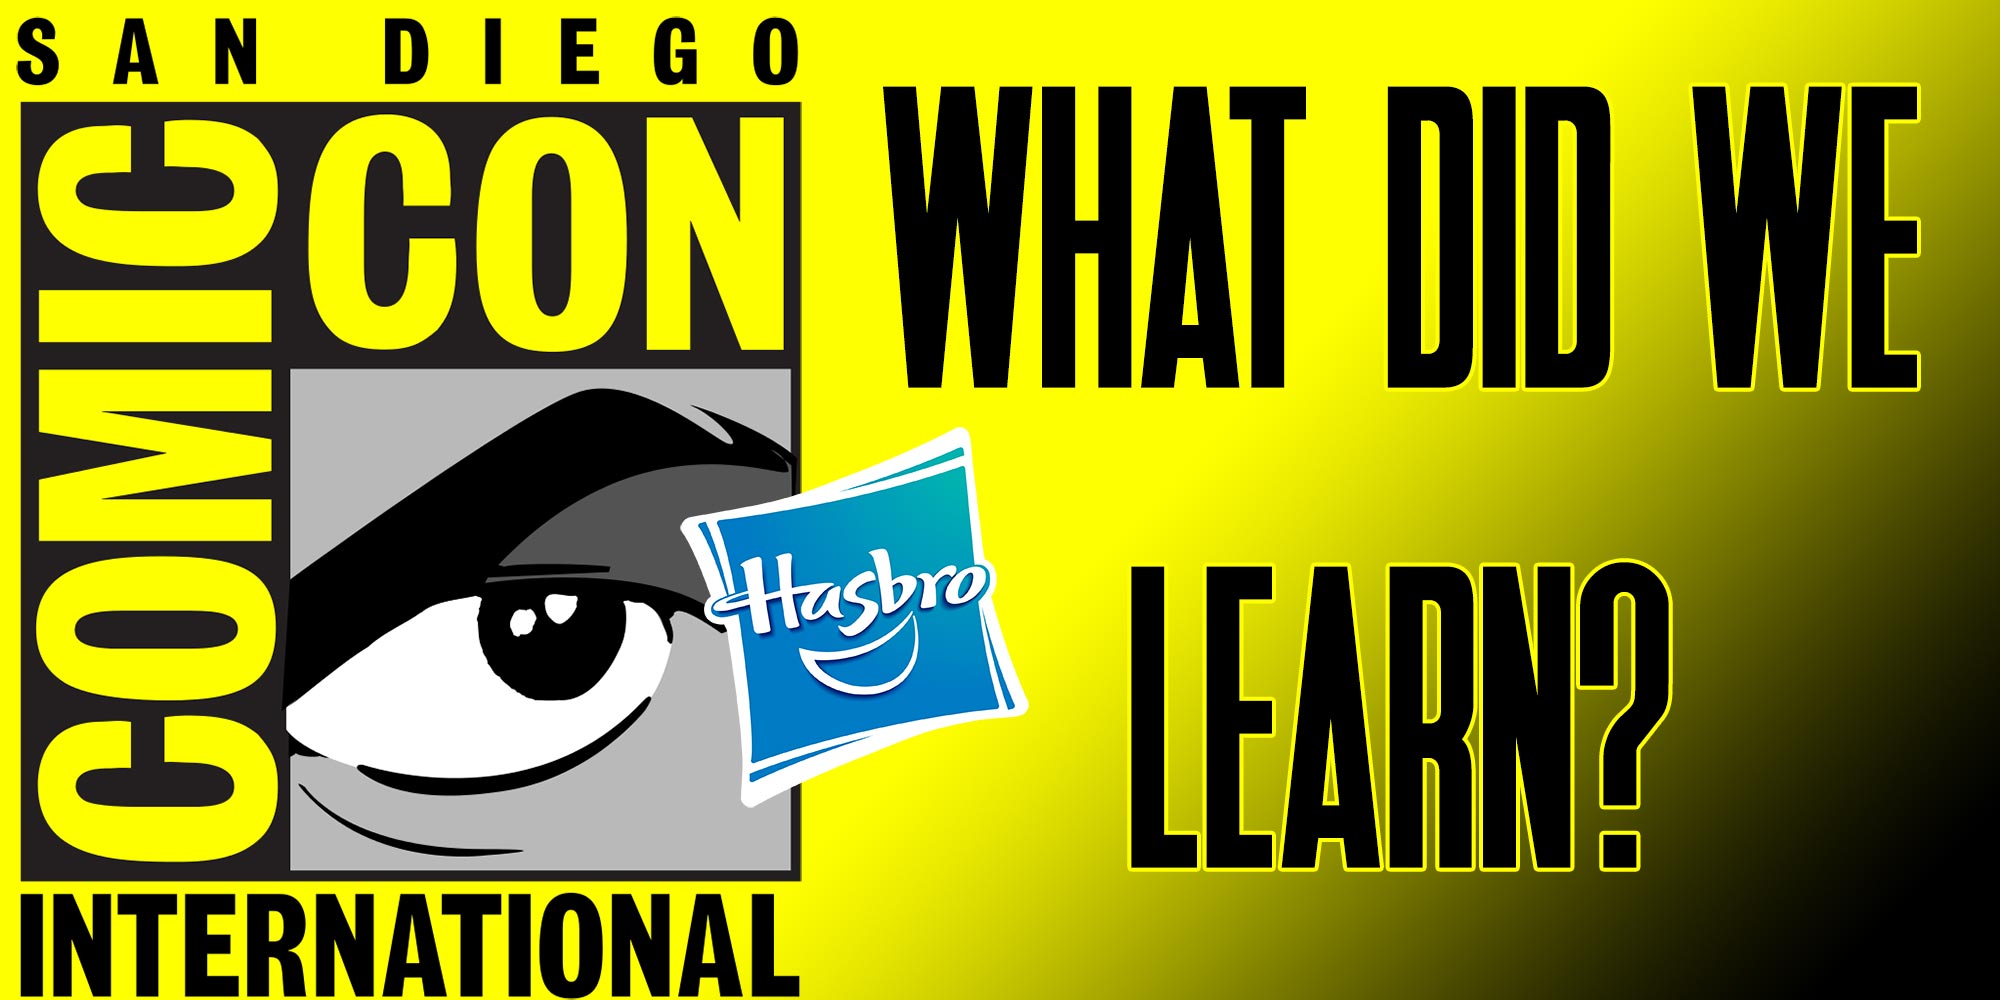 San Diego Comic Con Hasbro